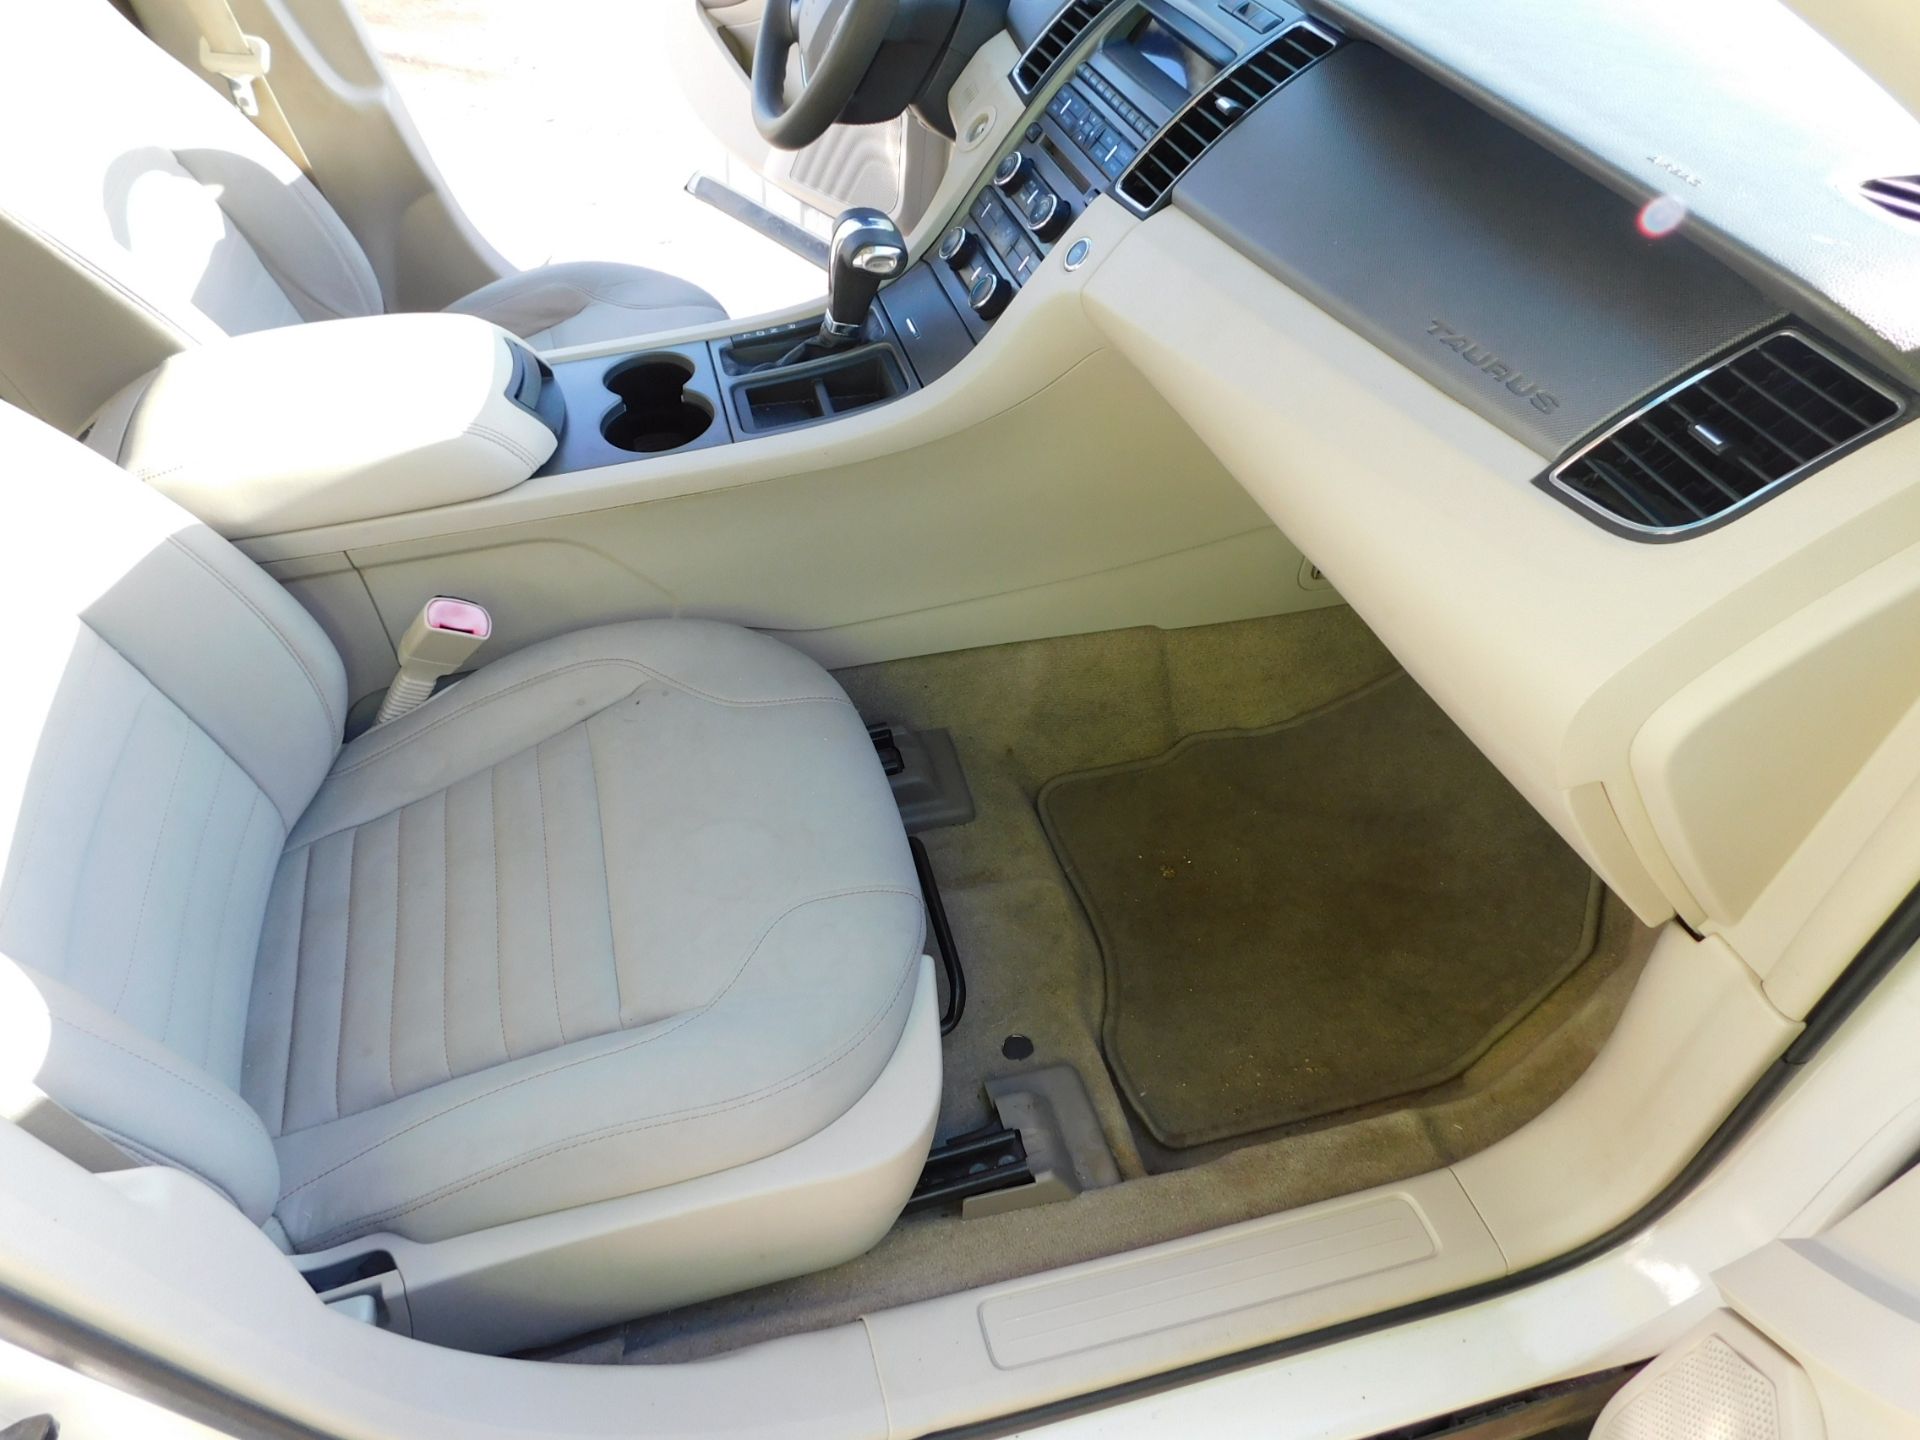 2011 Ford Taurus 4-Door Sedan vin 1FAHP20WXBG16330, Automatic Transmission, PW,PL, AC, Cloth - Image 36 of 41